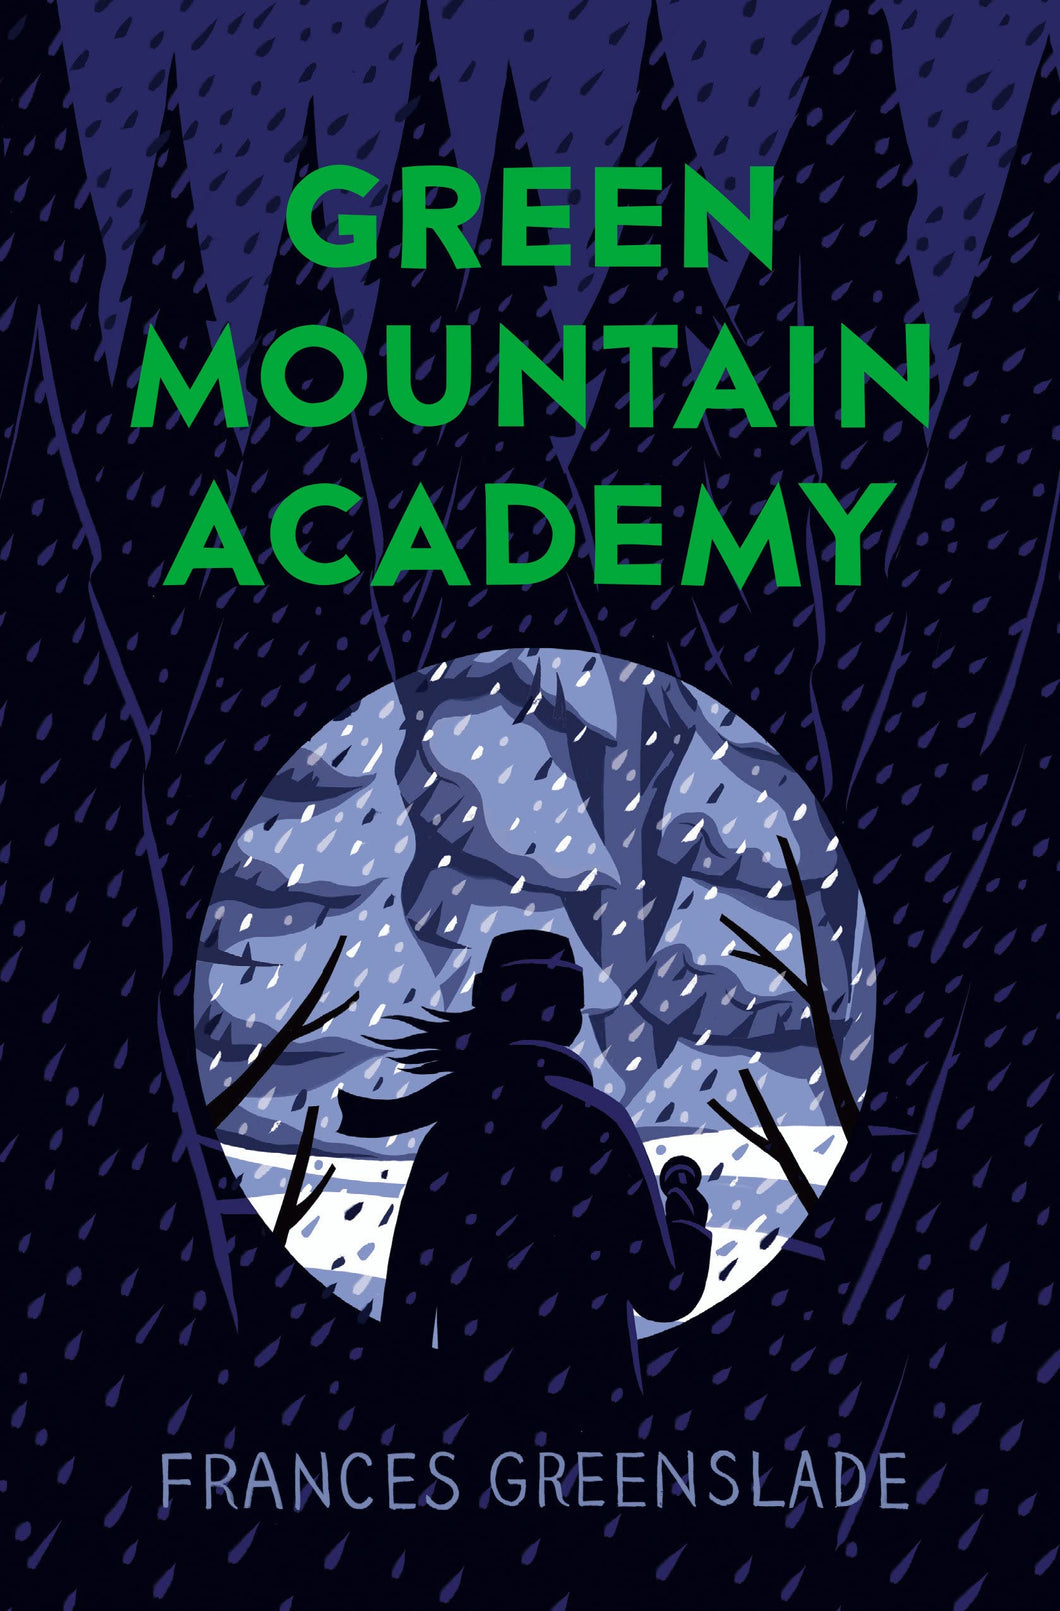 Green Mountain Academy [Frances Greenslade]